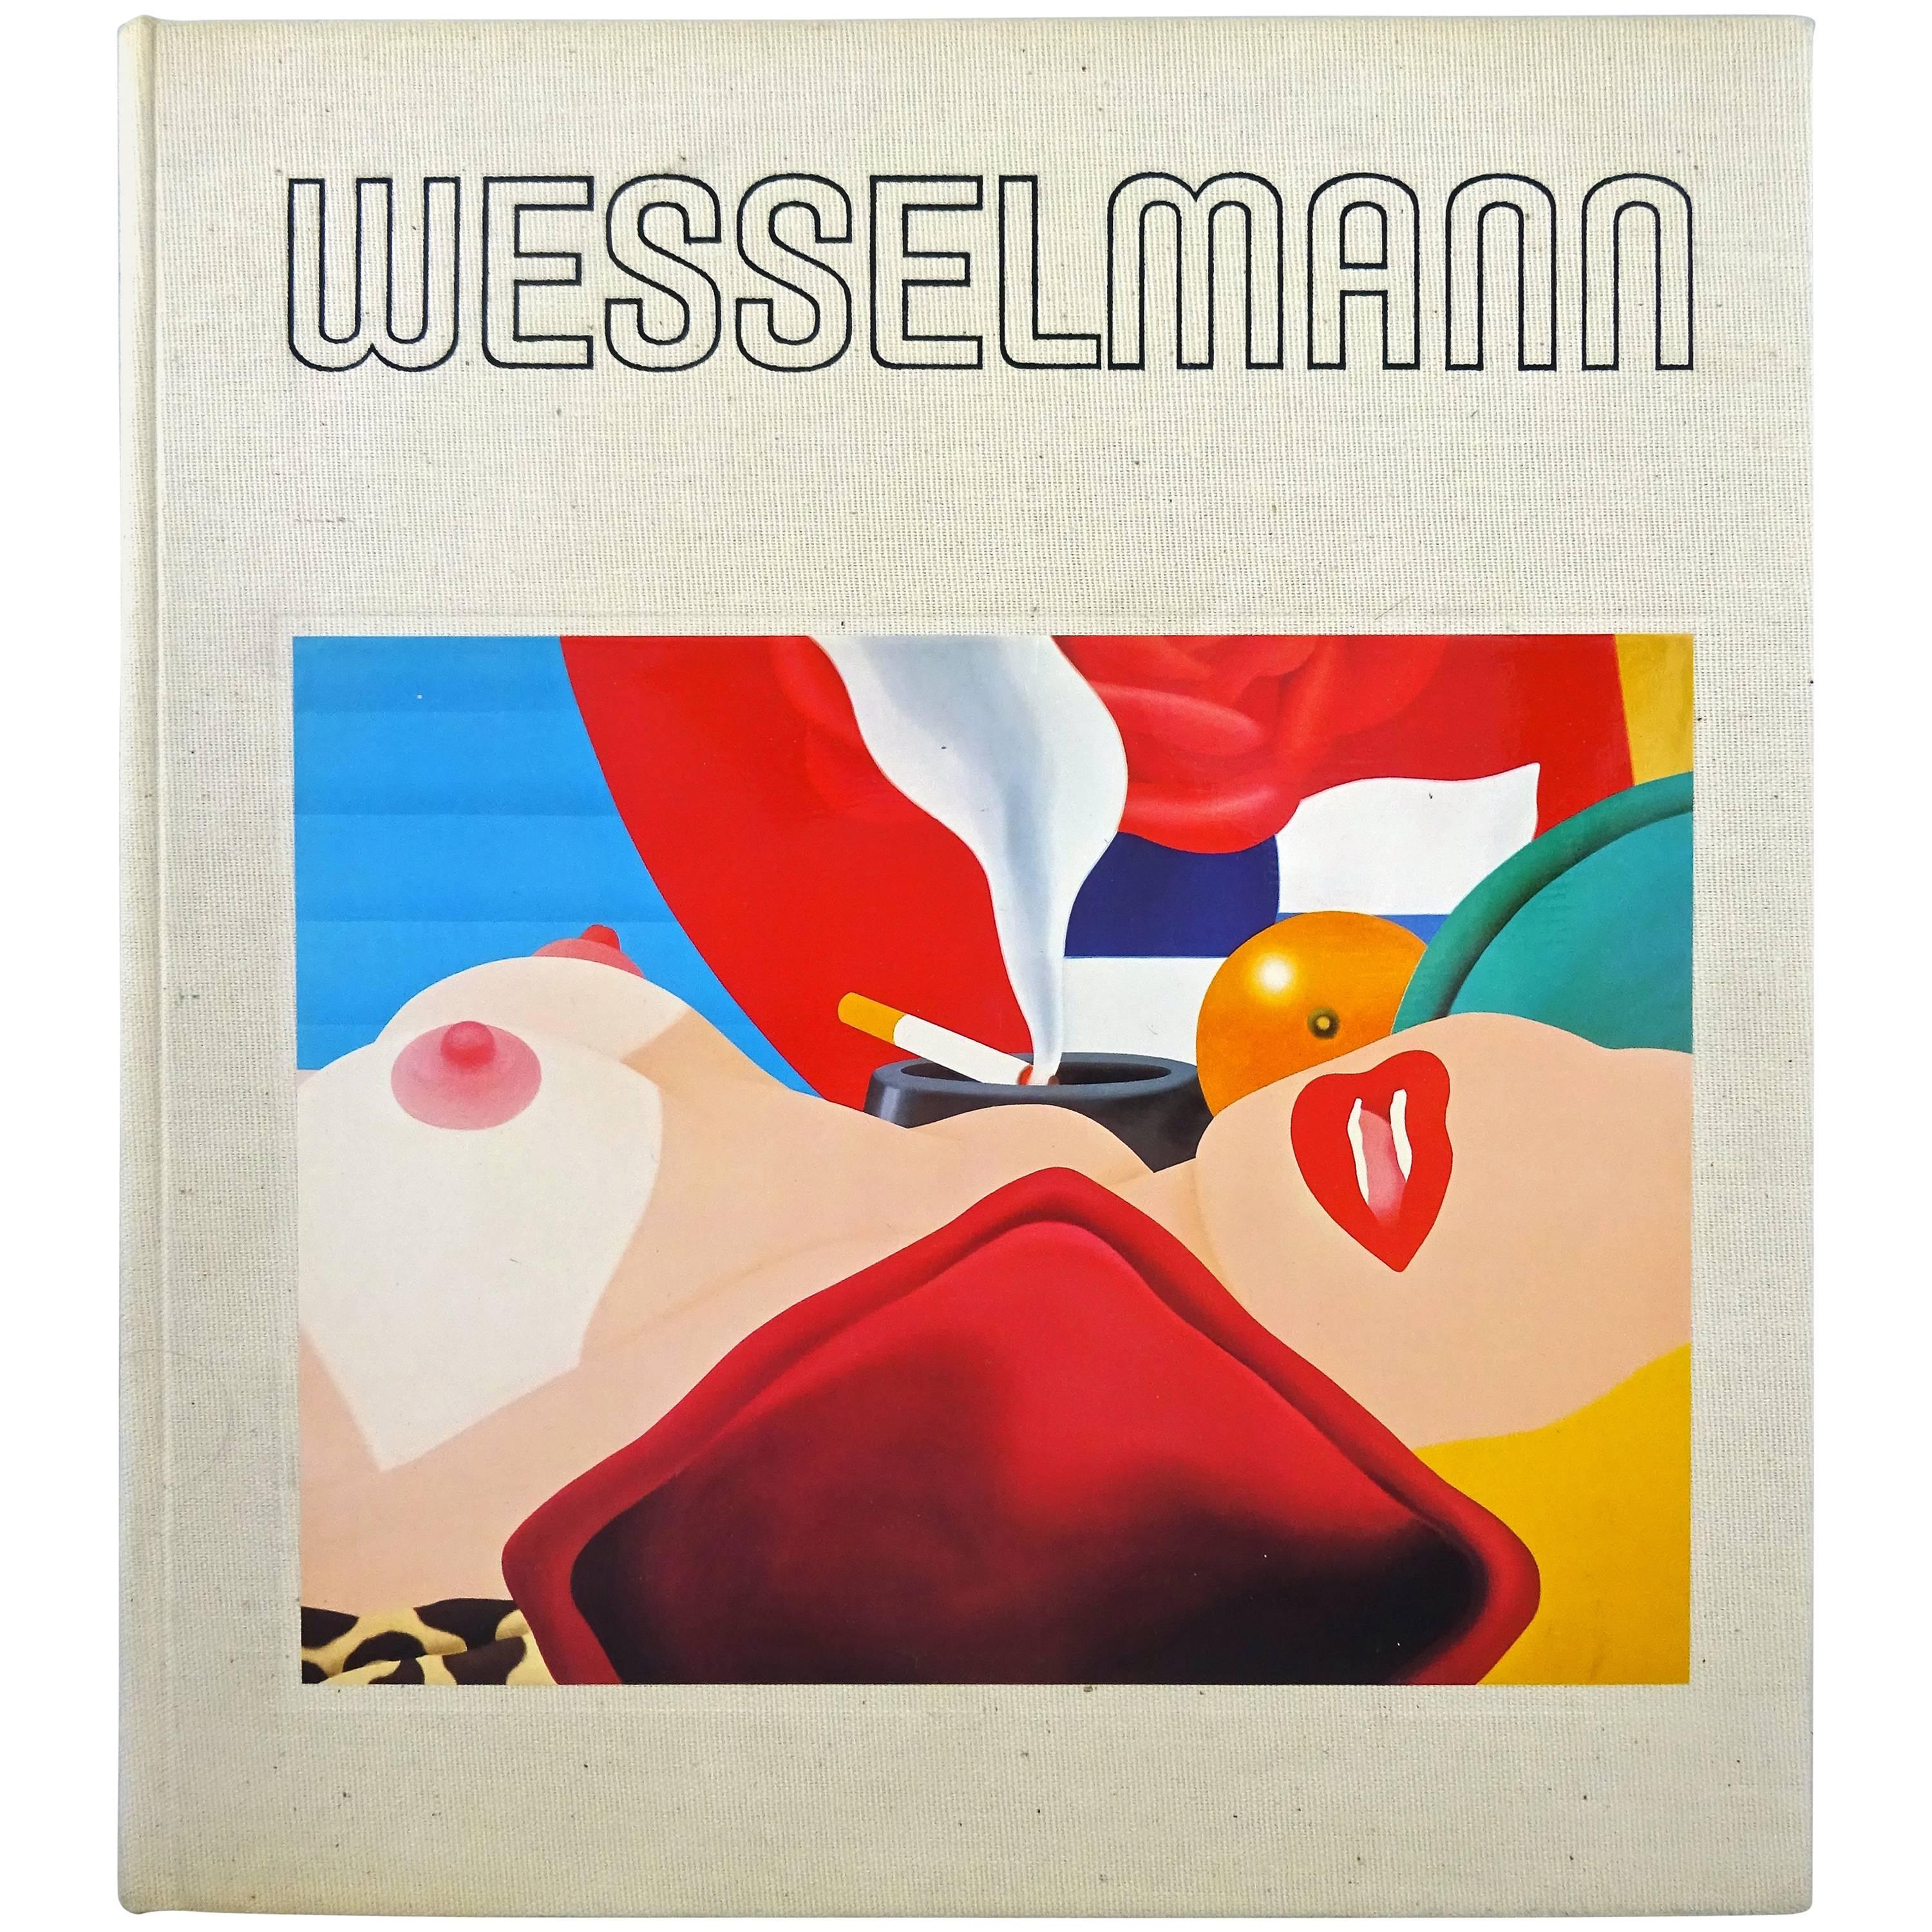 Rare Tom Wesselman Book, 1st Edition, 1980